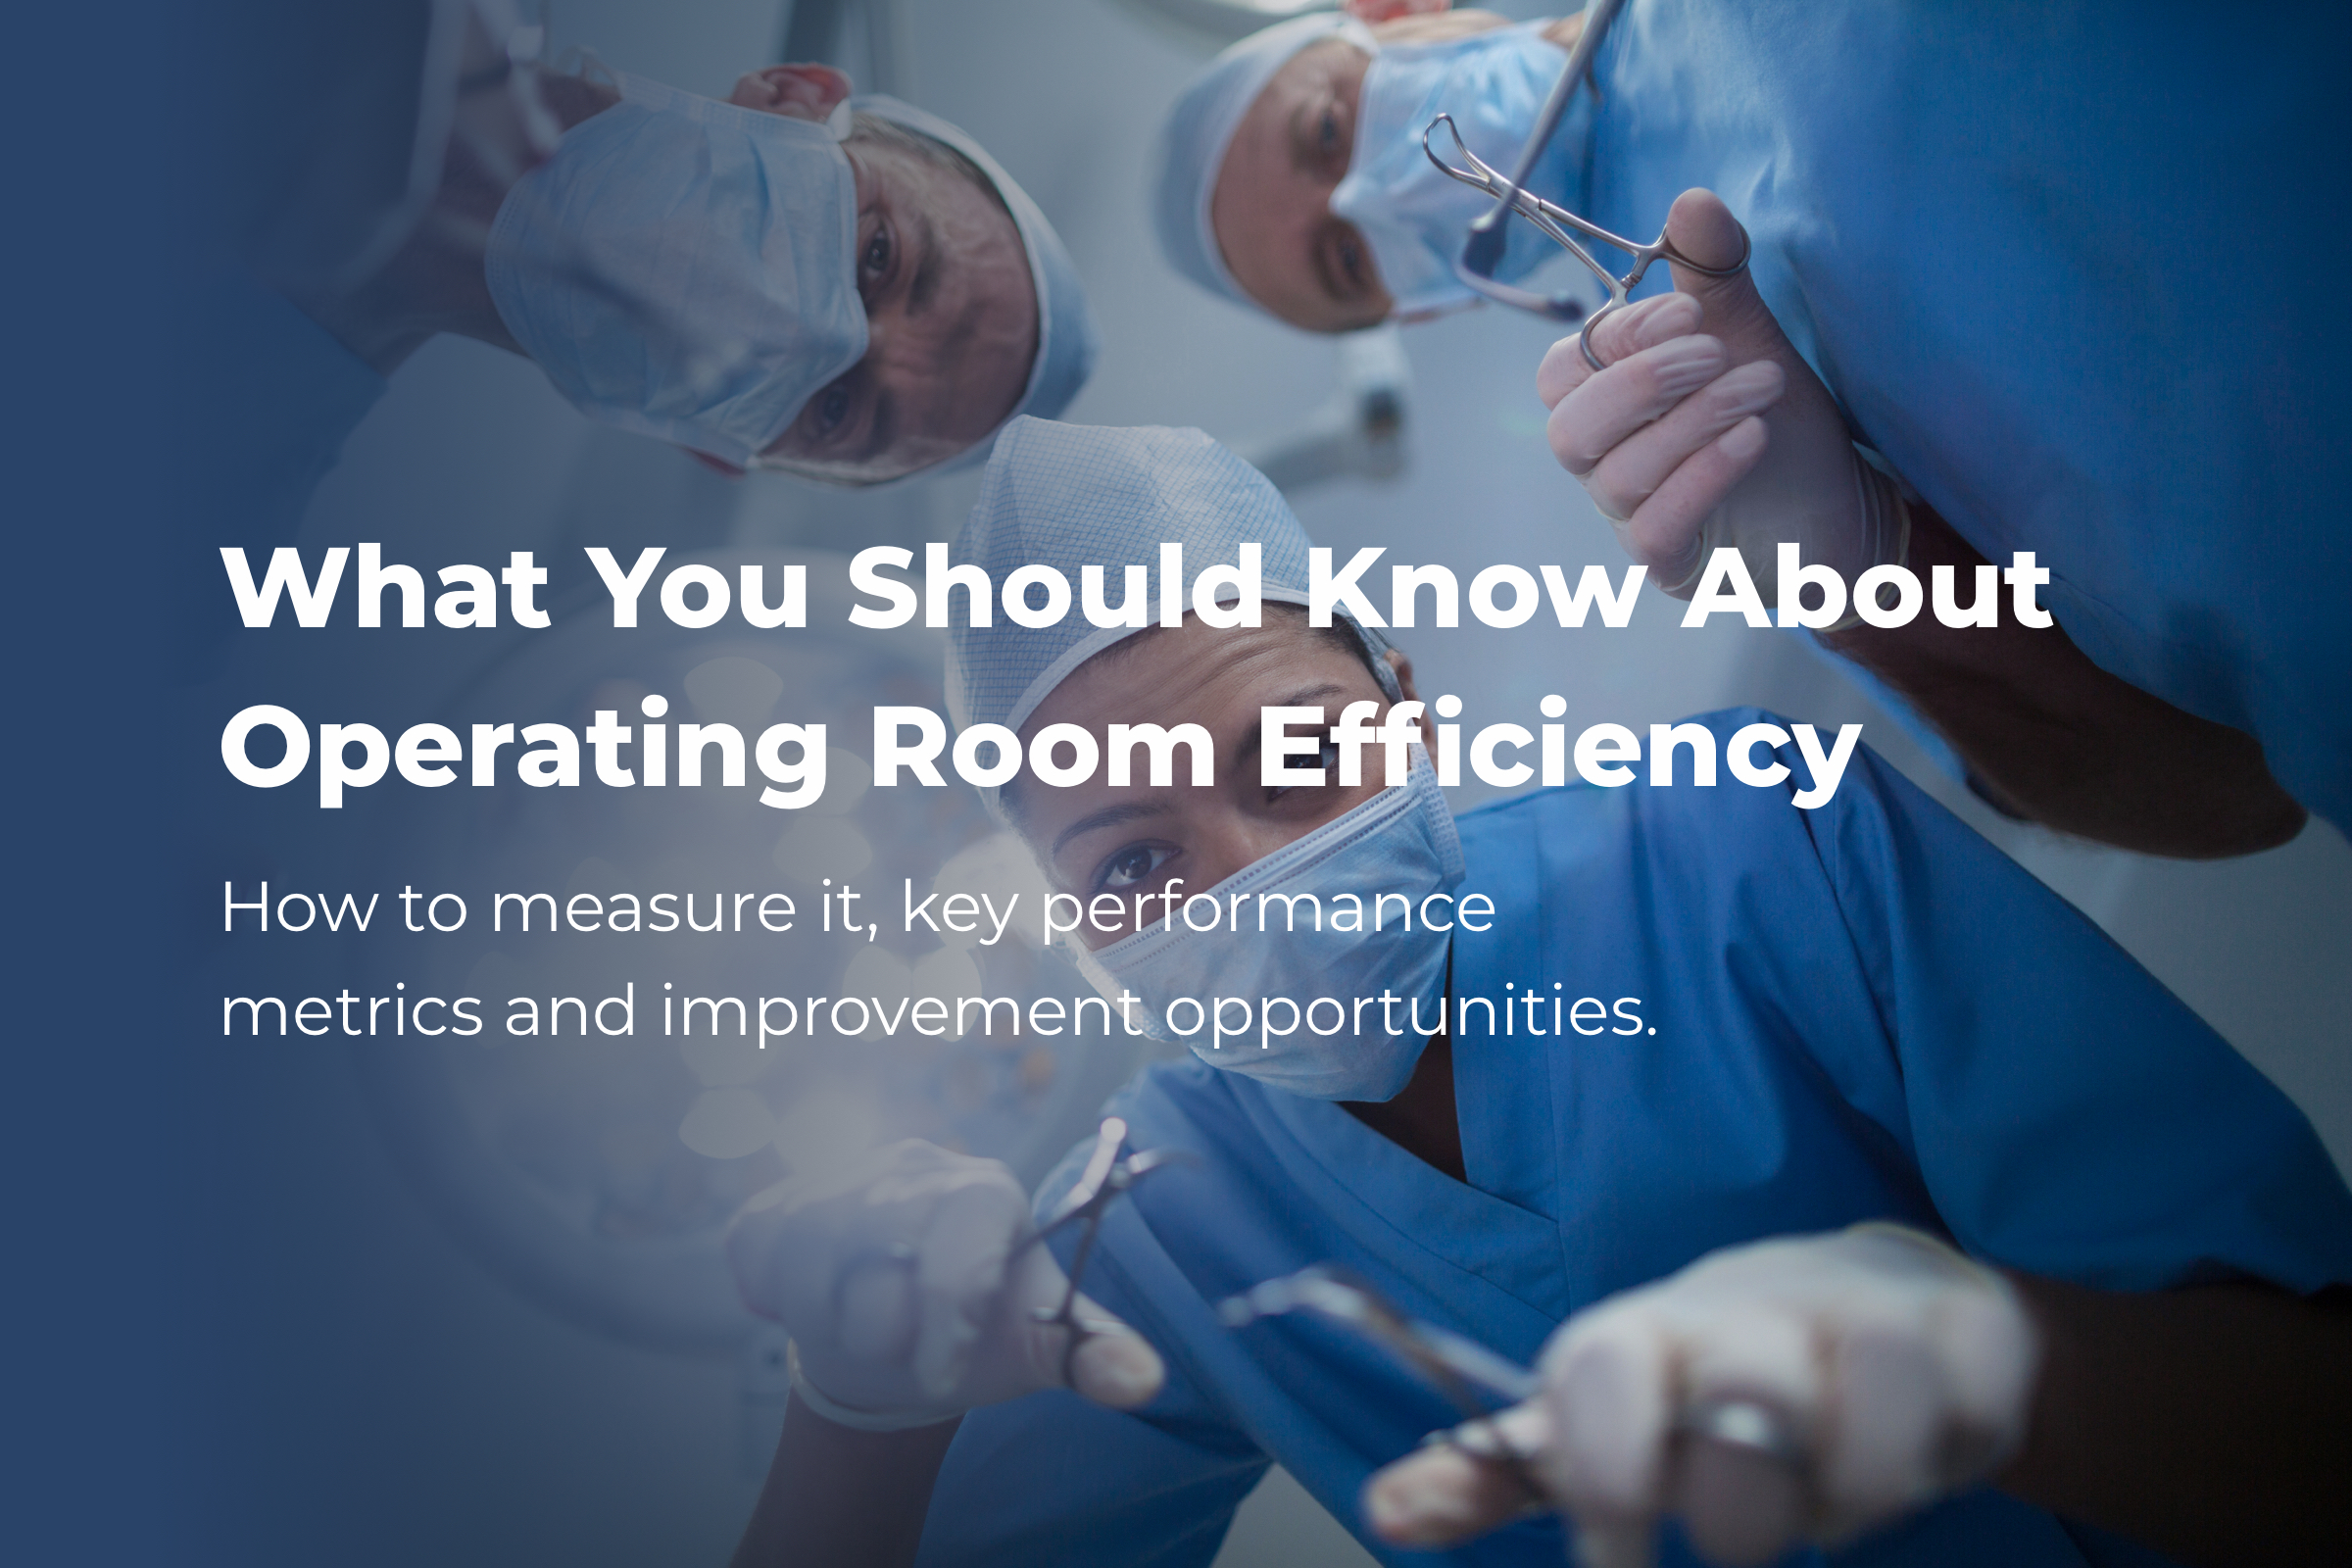 improve operating room efficiency